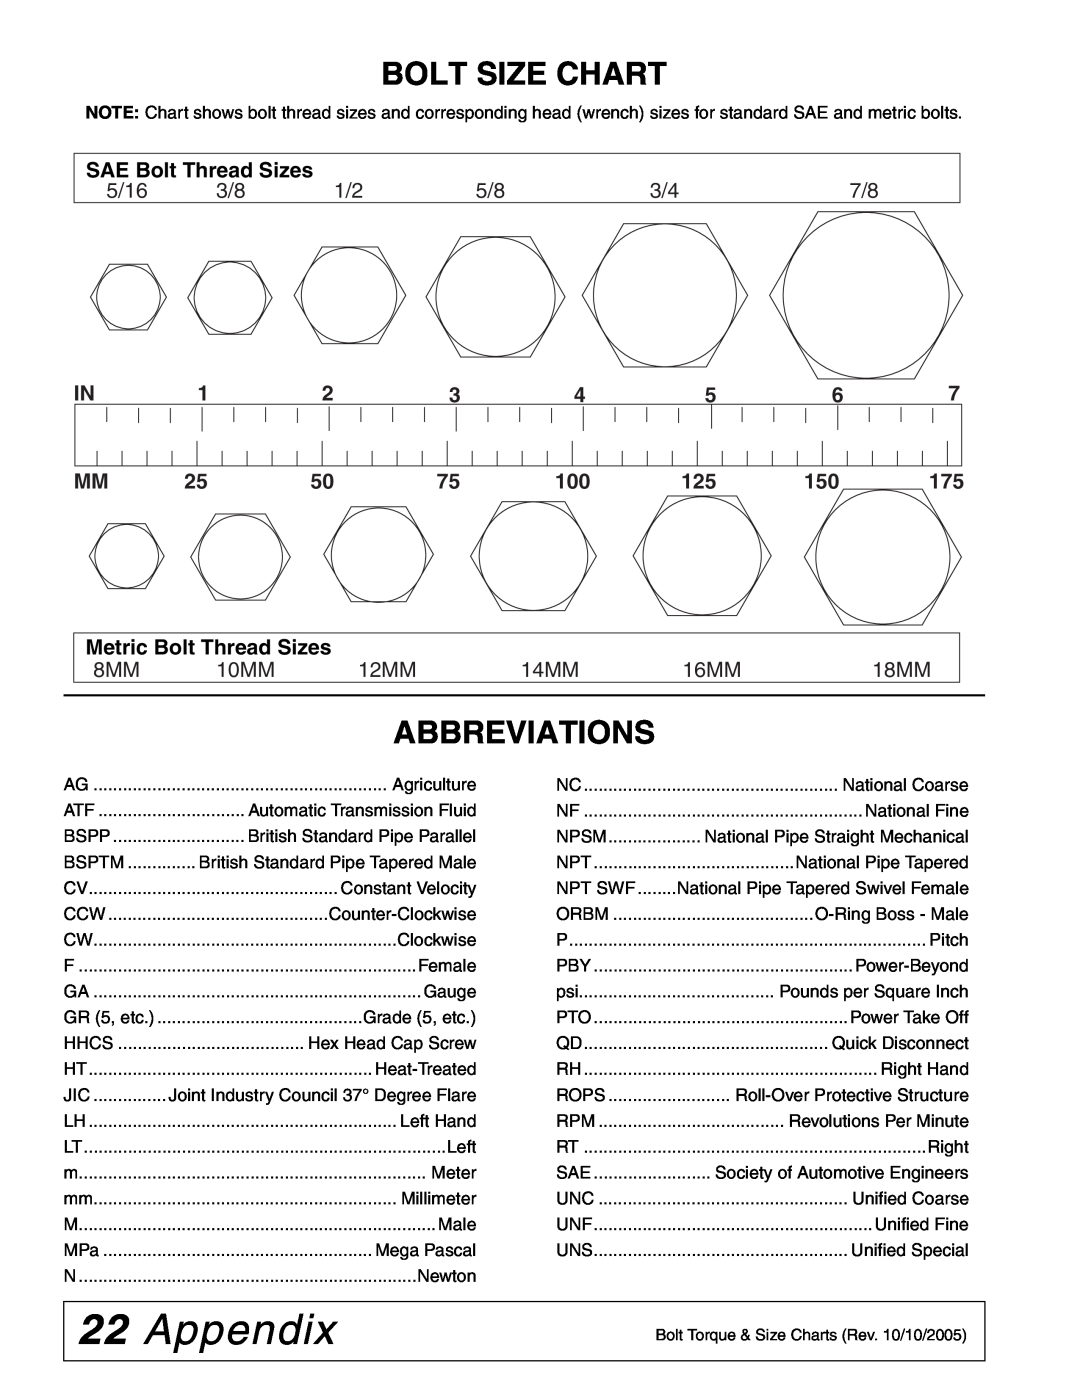 Woods Equipment 1023000 Appendix, Bolt Size Chart, Abbreviations, SAE Bolt Thread Sizes, 5/16, Metric Bolt Thread Sizes 